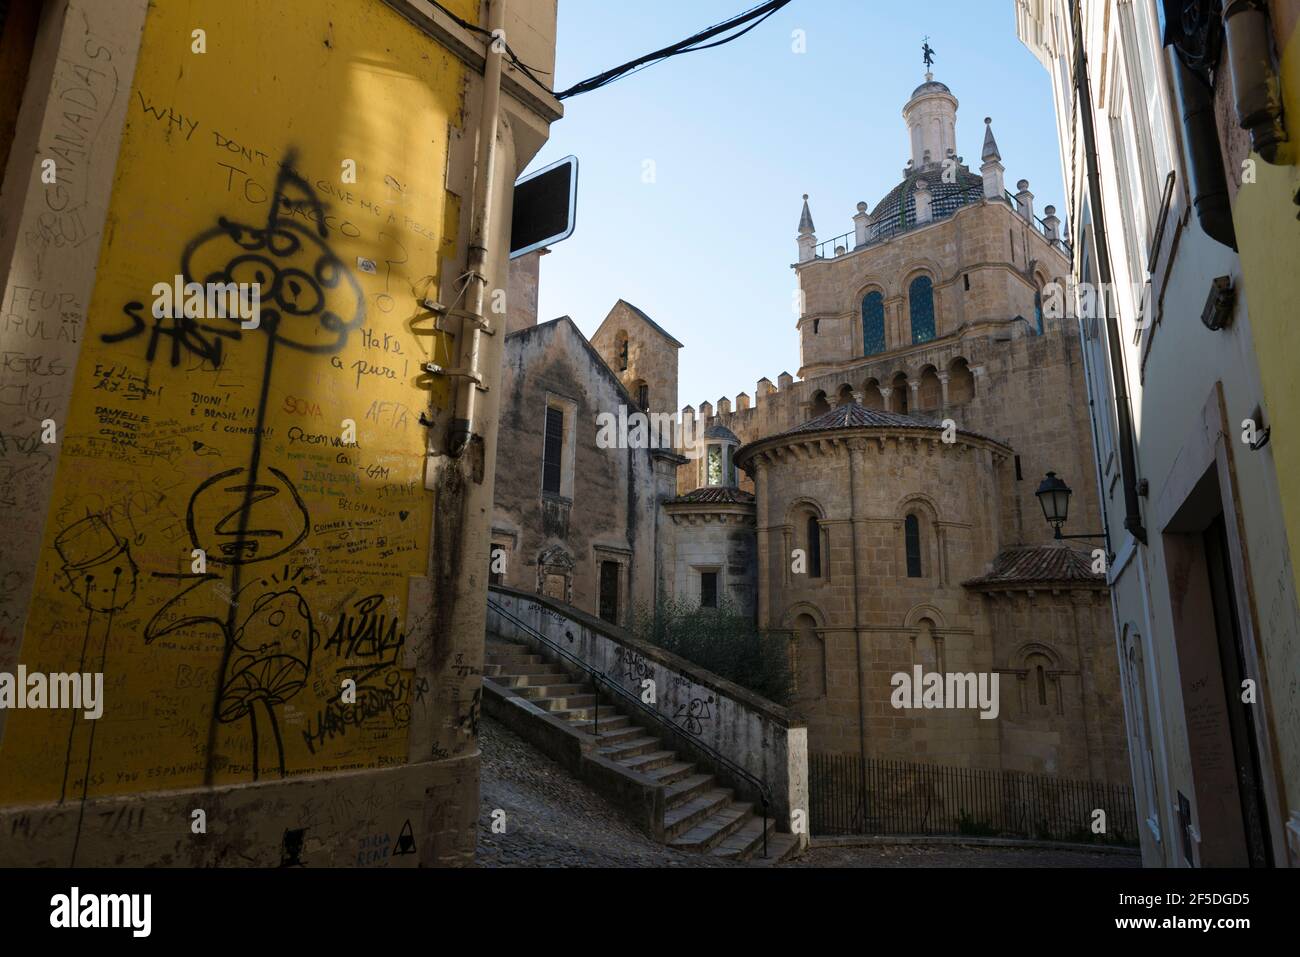 Disfiguring graffiti on a yellow wall near the Old Cathedral of Coimbra ( Sé Velha de Coimbra) . Portugal. Stock Photo